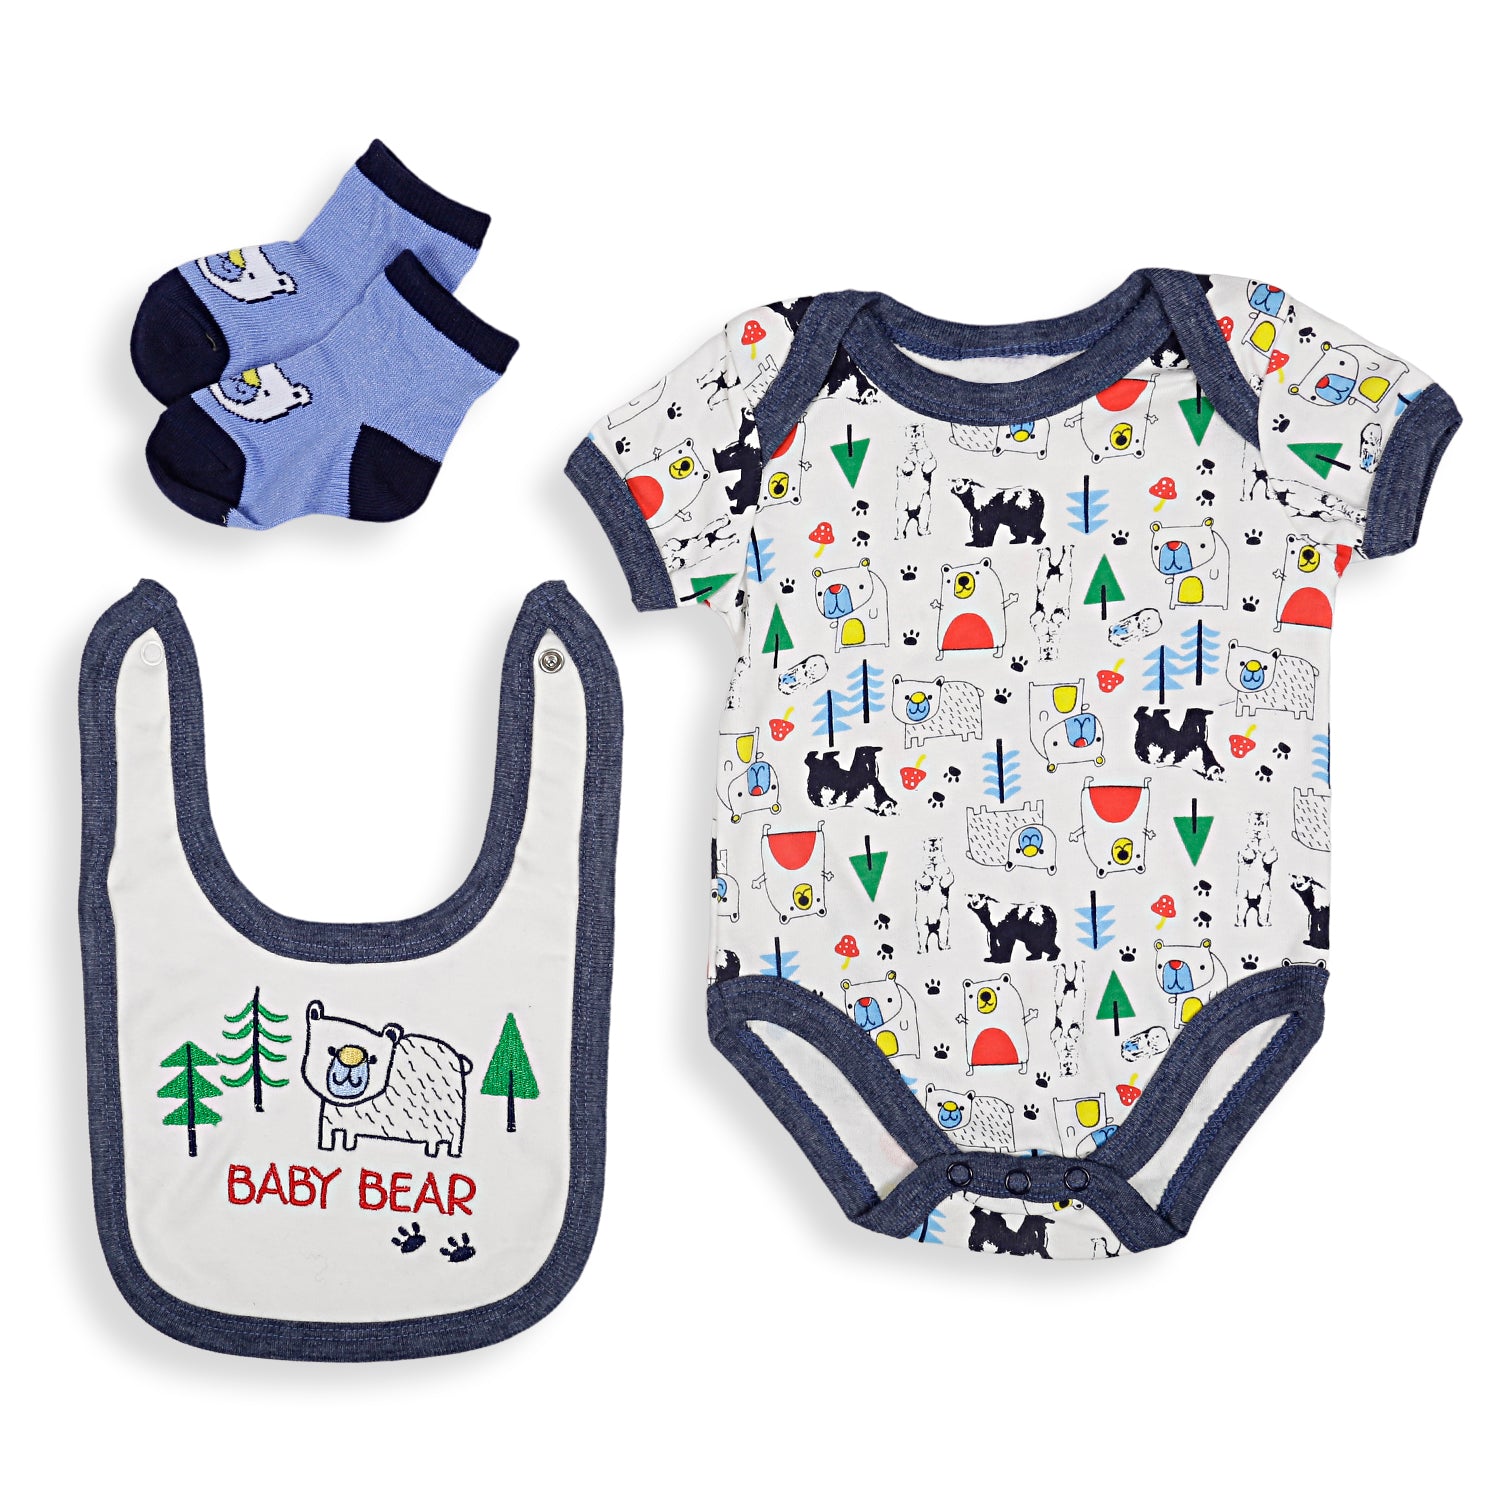 Gift Set Set Of 5 Bib Body Suits Pant And Socks Bear Blue - Baby Moo